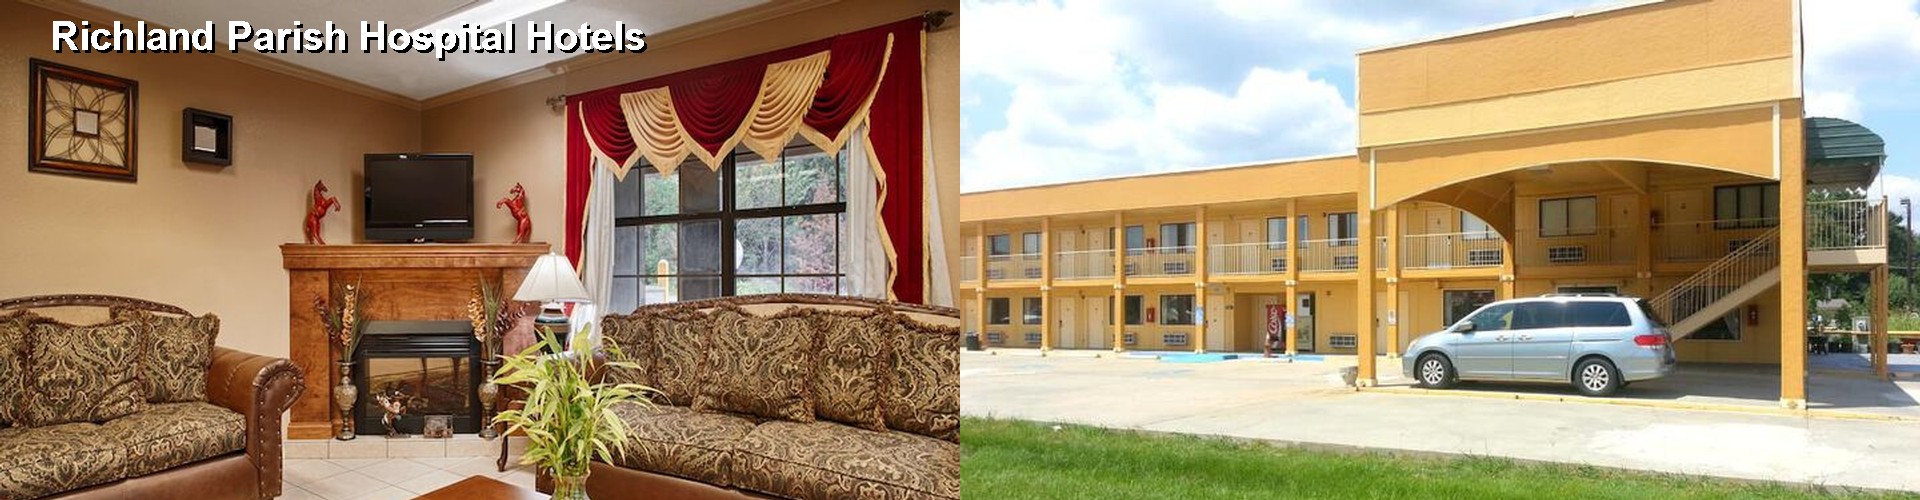 3 Best Hotels near Richland Parish Hospital